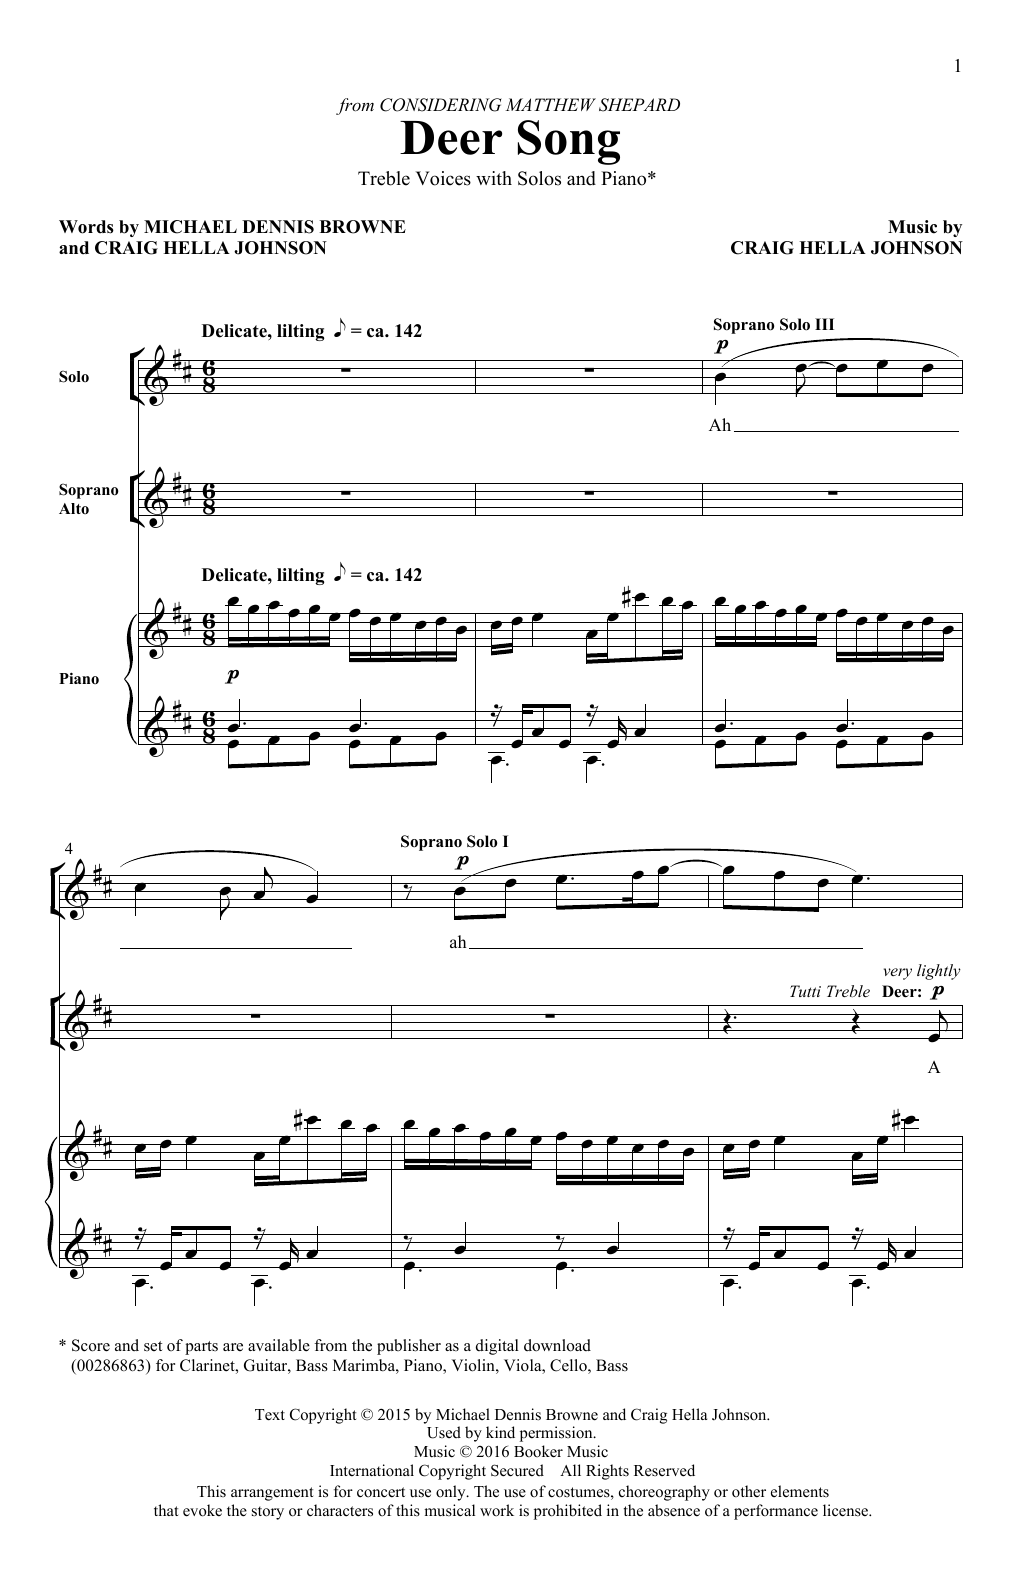 Craig Hella Johnson Deer Song (from Considering Matthew Shepard) Sheet Music Notes & Chords for SSA Choir - Download or Print PDF